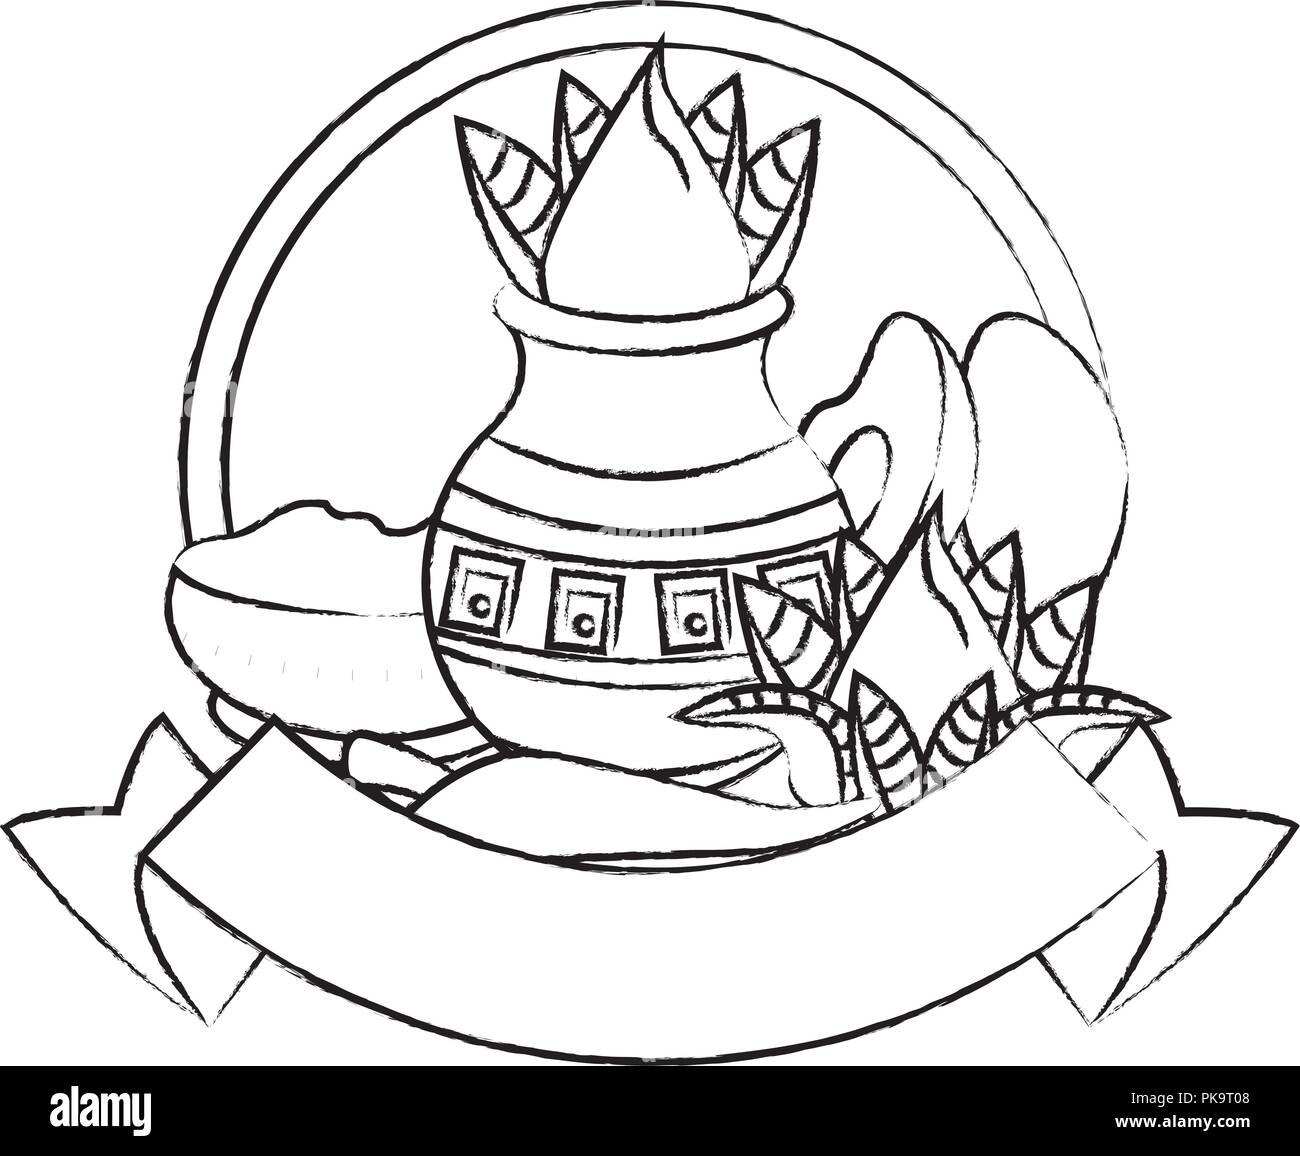 Image Details ISS_13732_01617 - Native american chief head illustration.  Design elements for logo, label, emblem,sign. Vector illustration